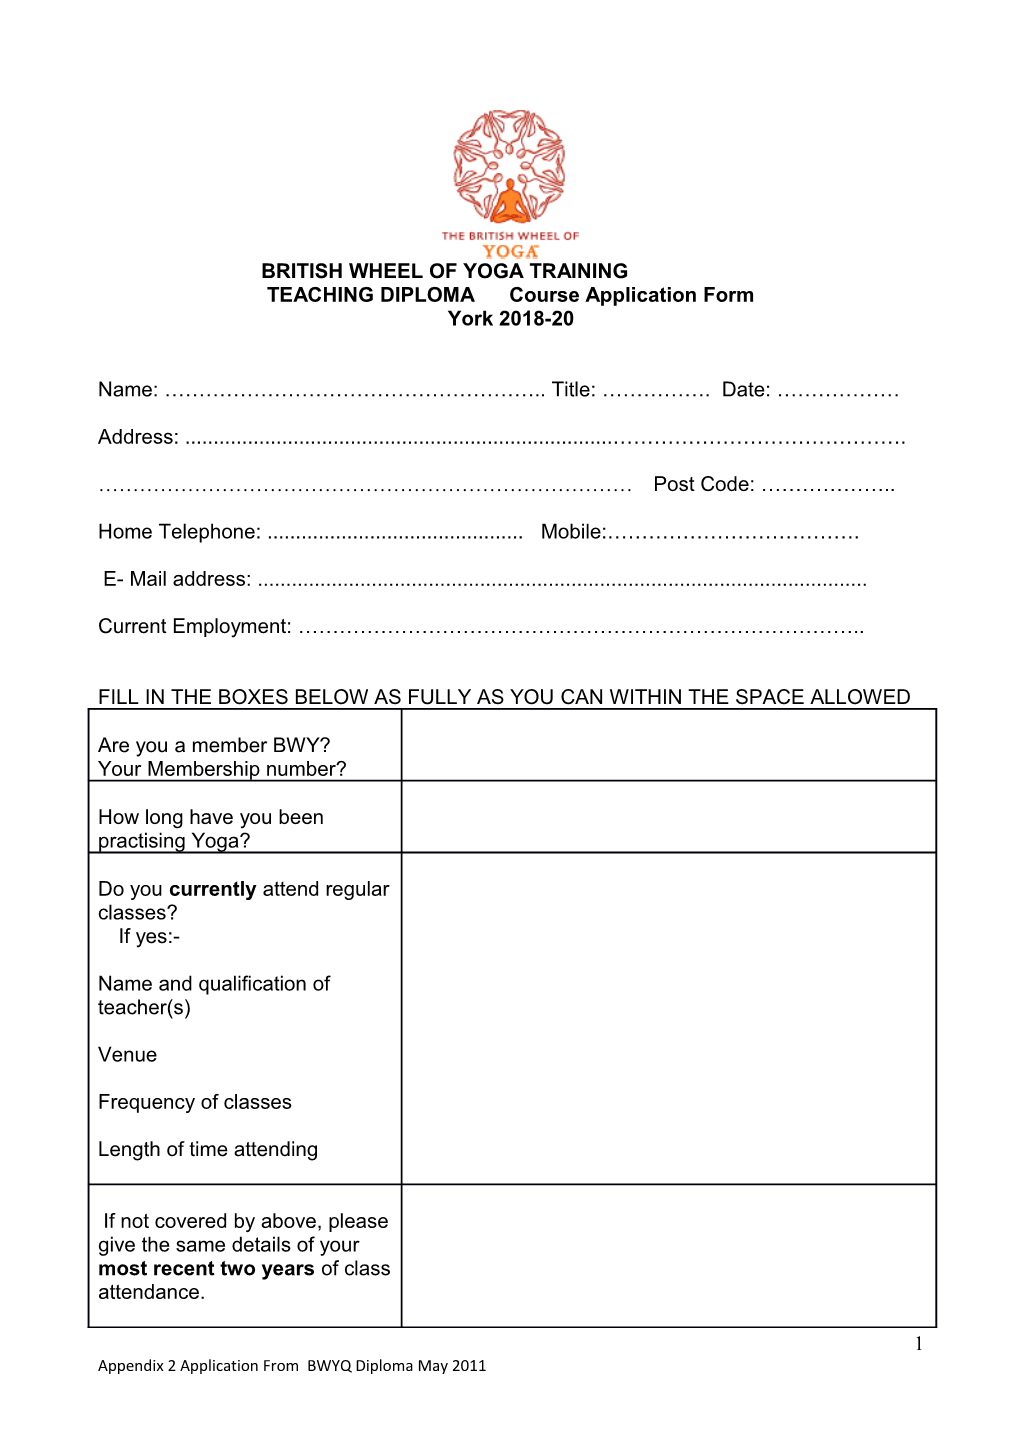 British Wheel of Yoga Foundation Course Application Form